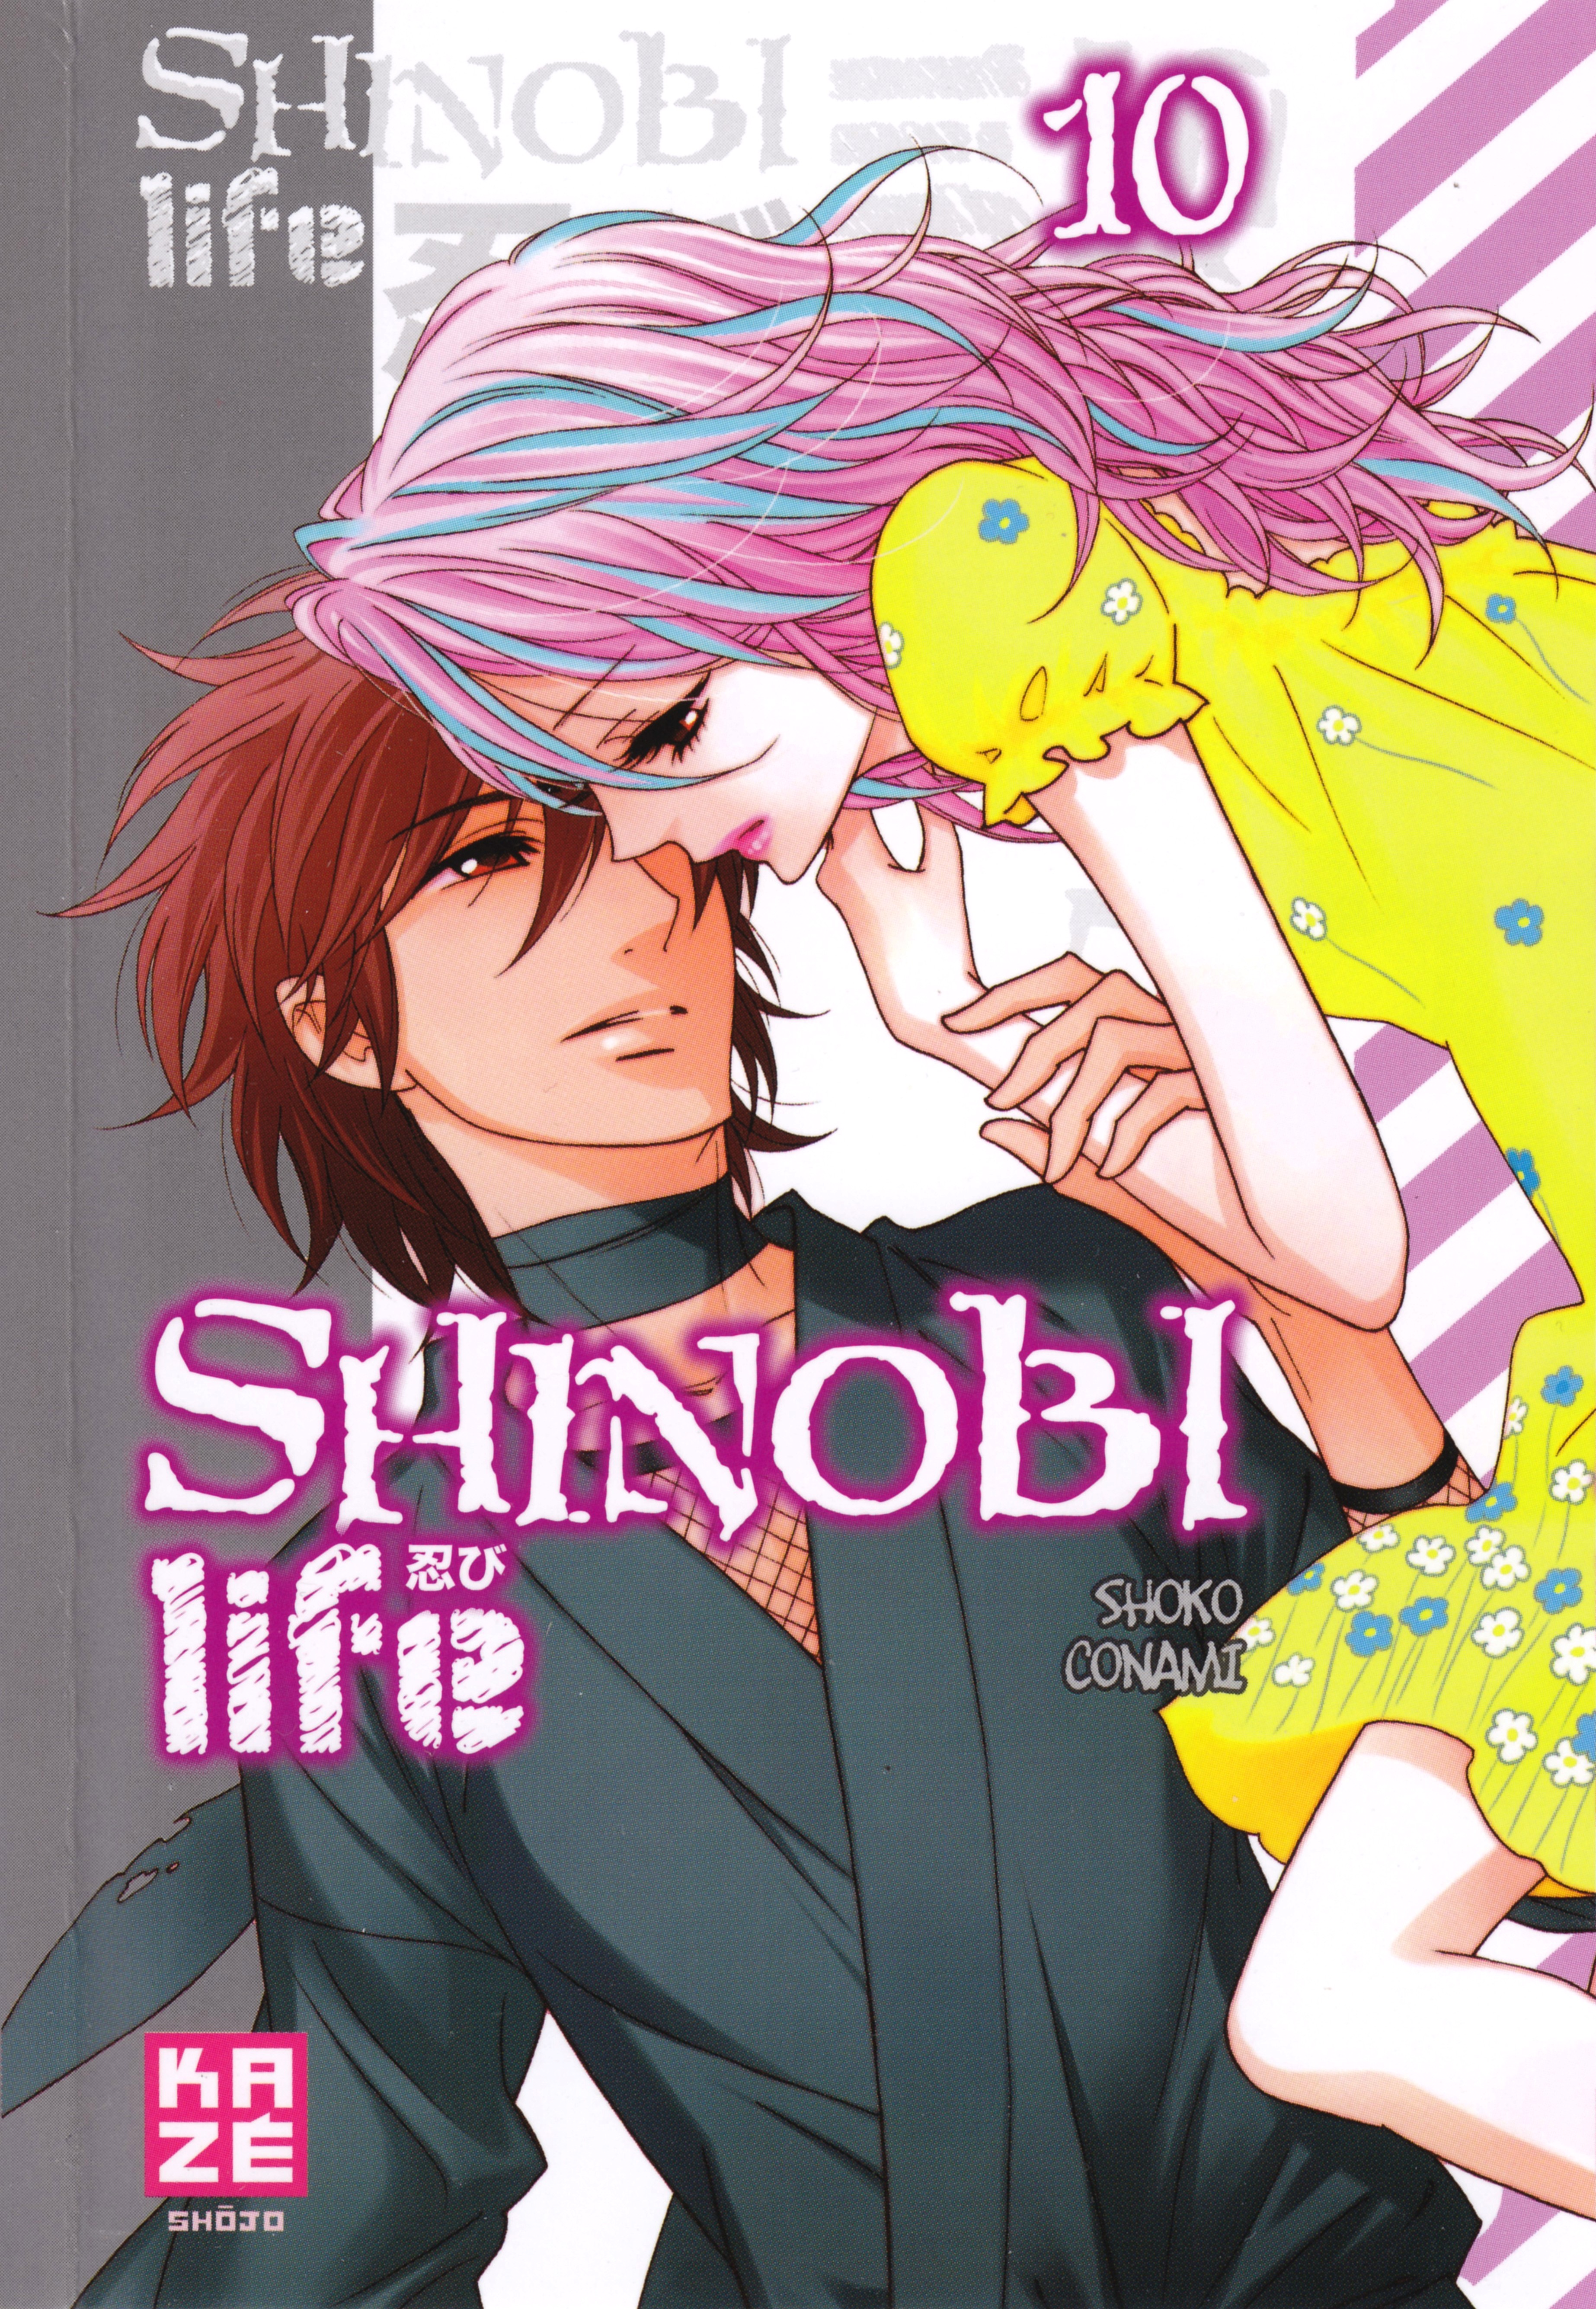 Shinobi Life #9